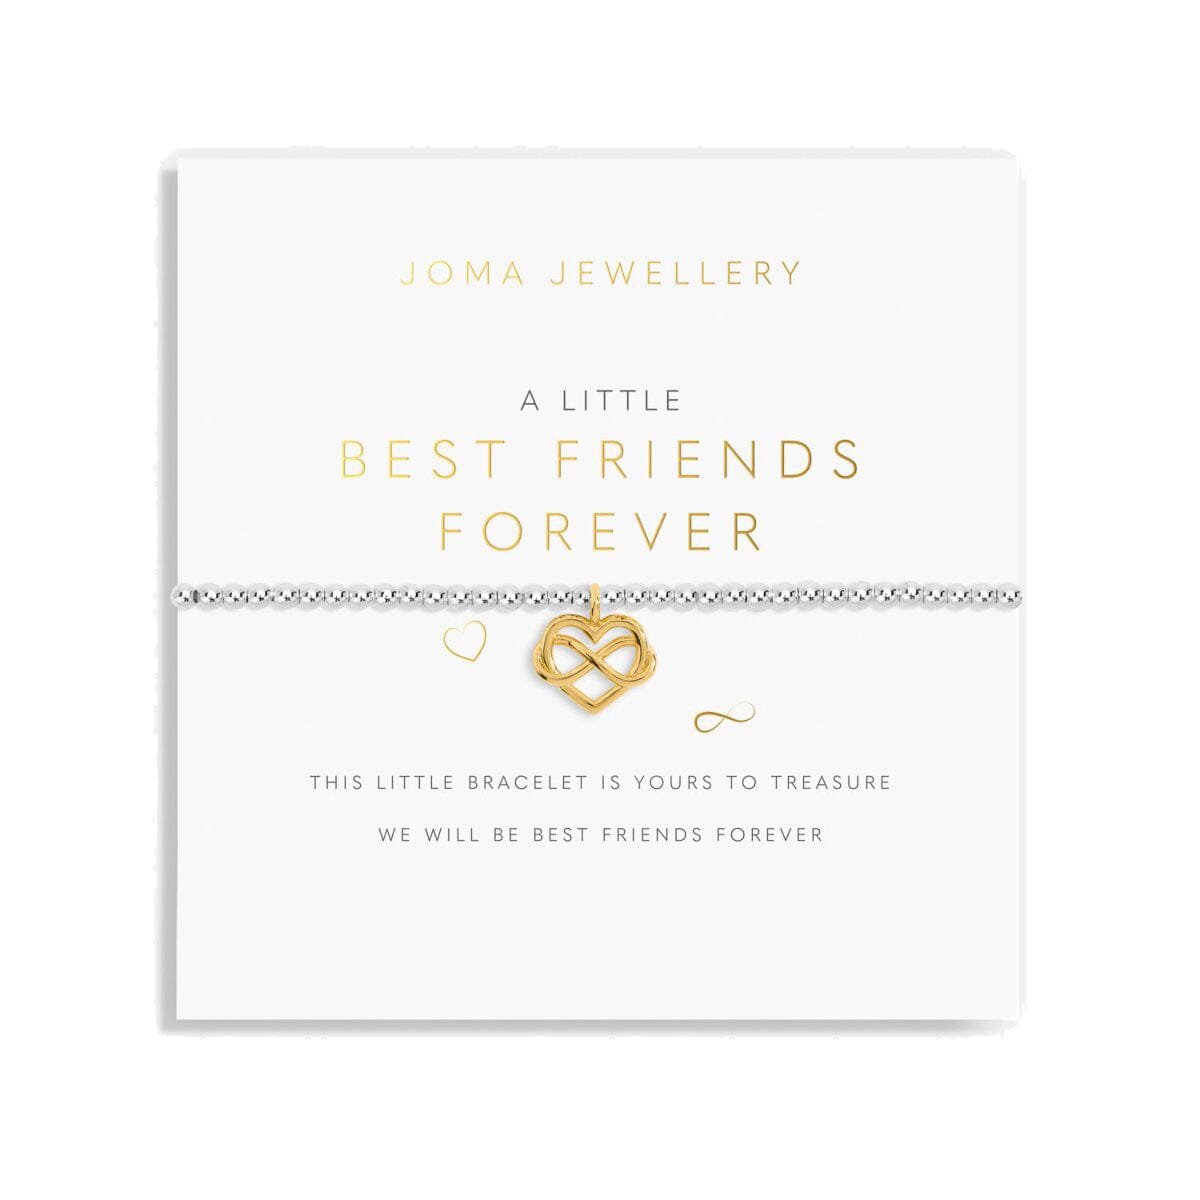 Joma Jewellery Childrens Bracelet Joma Jewellery Children's Bracelet - A Little Best Friends Forever